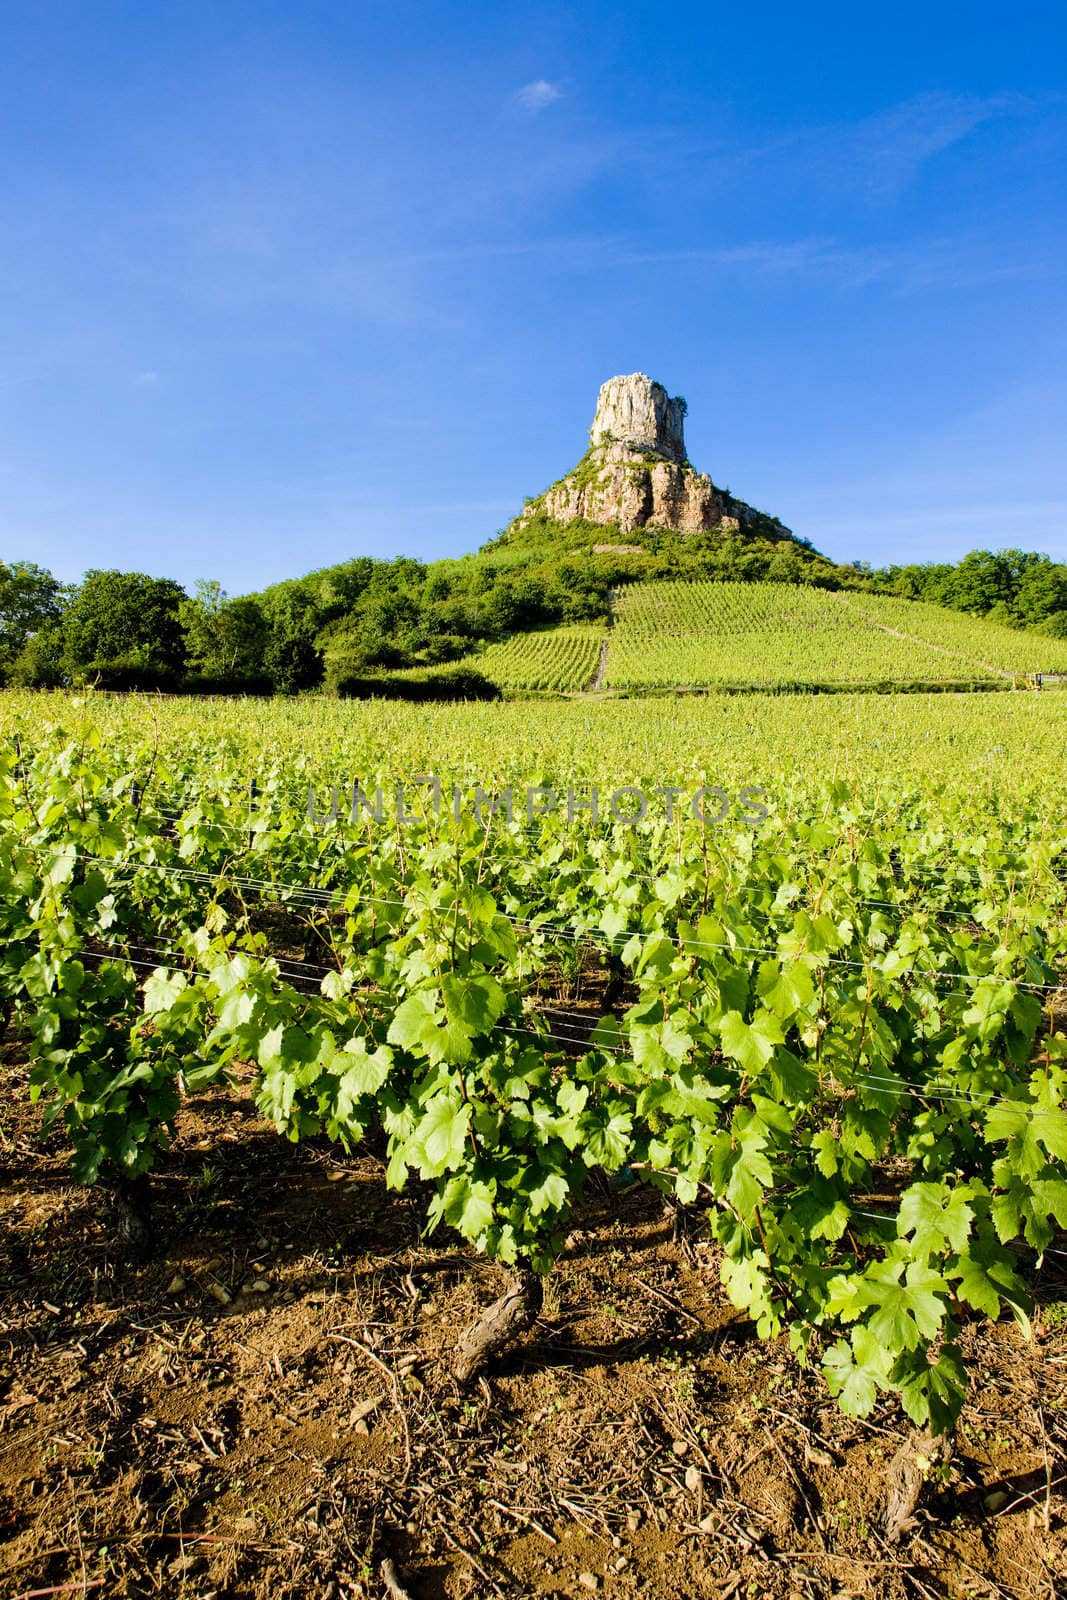 La Roche de Solutr� with vineyards, Burgundy, France by phbcz